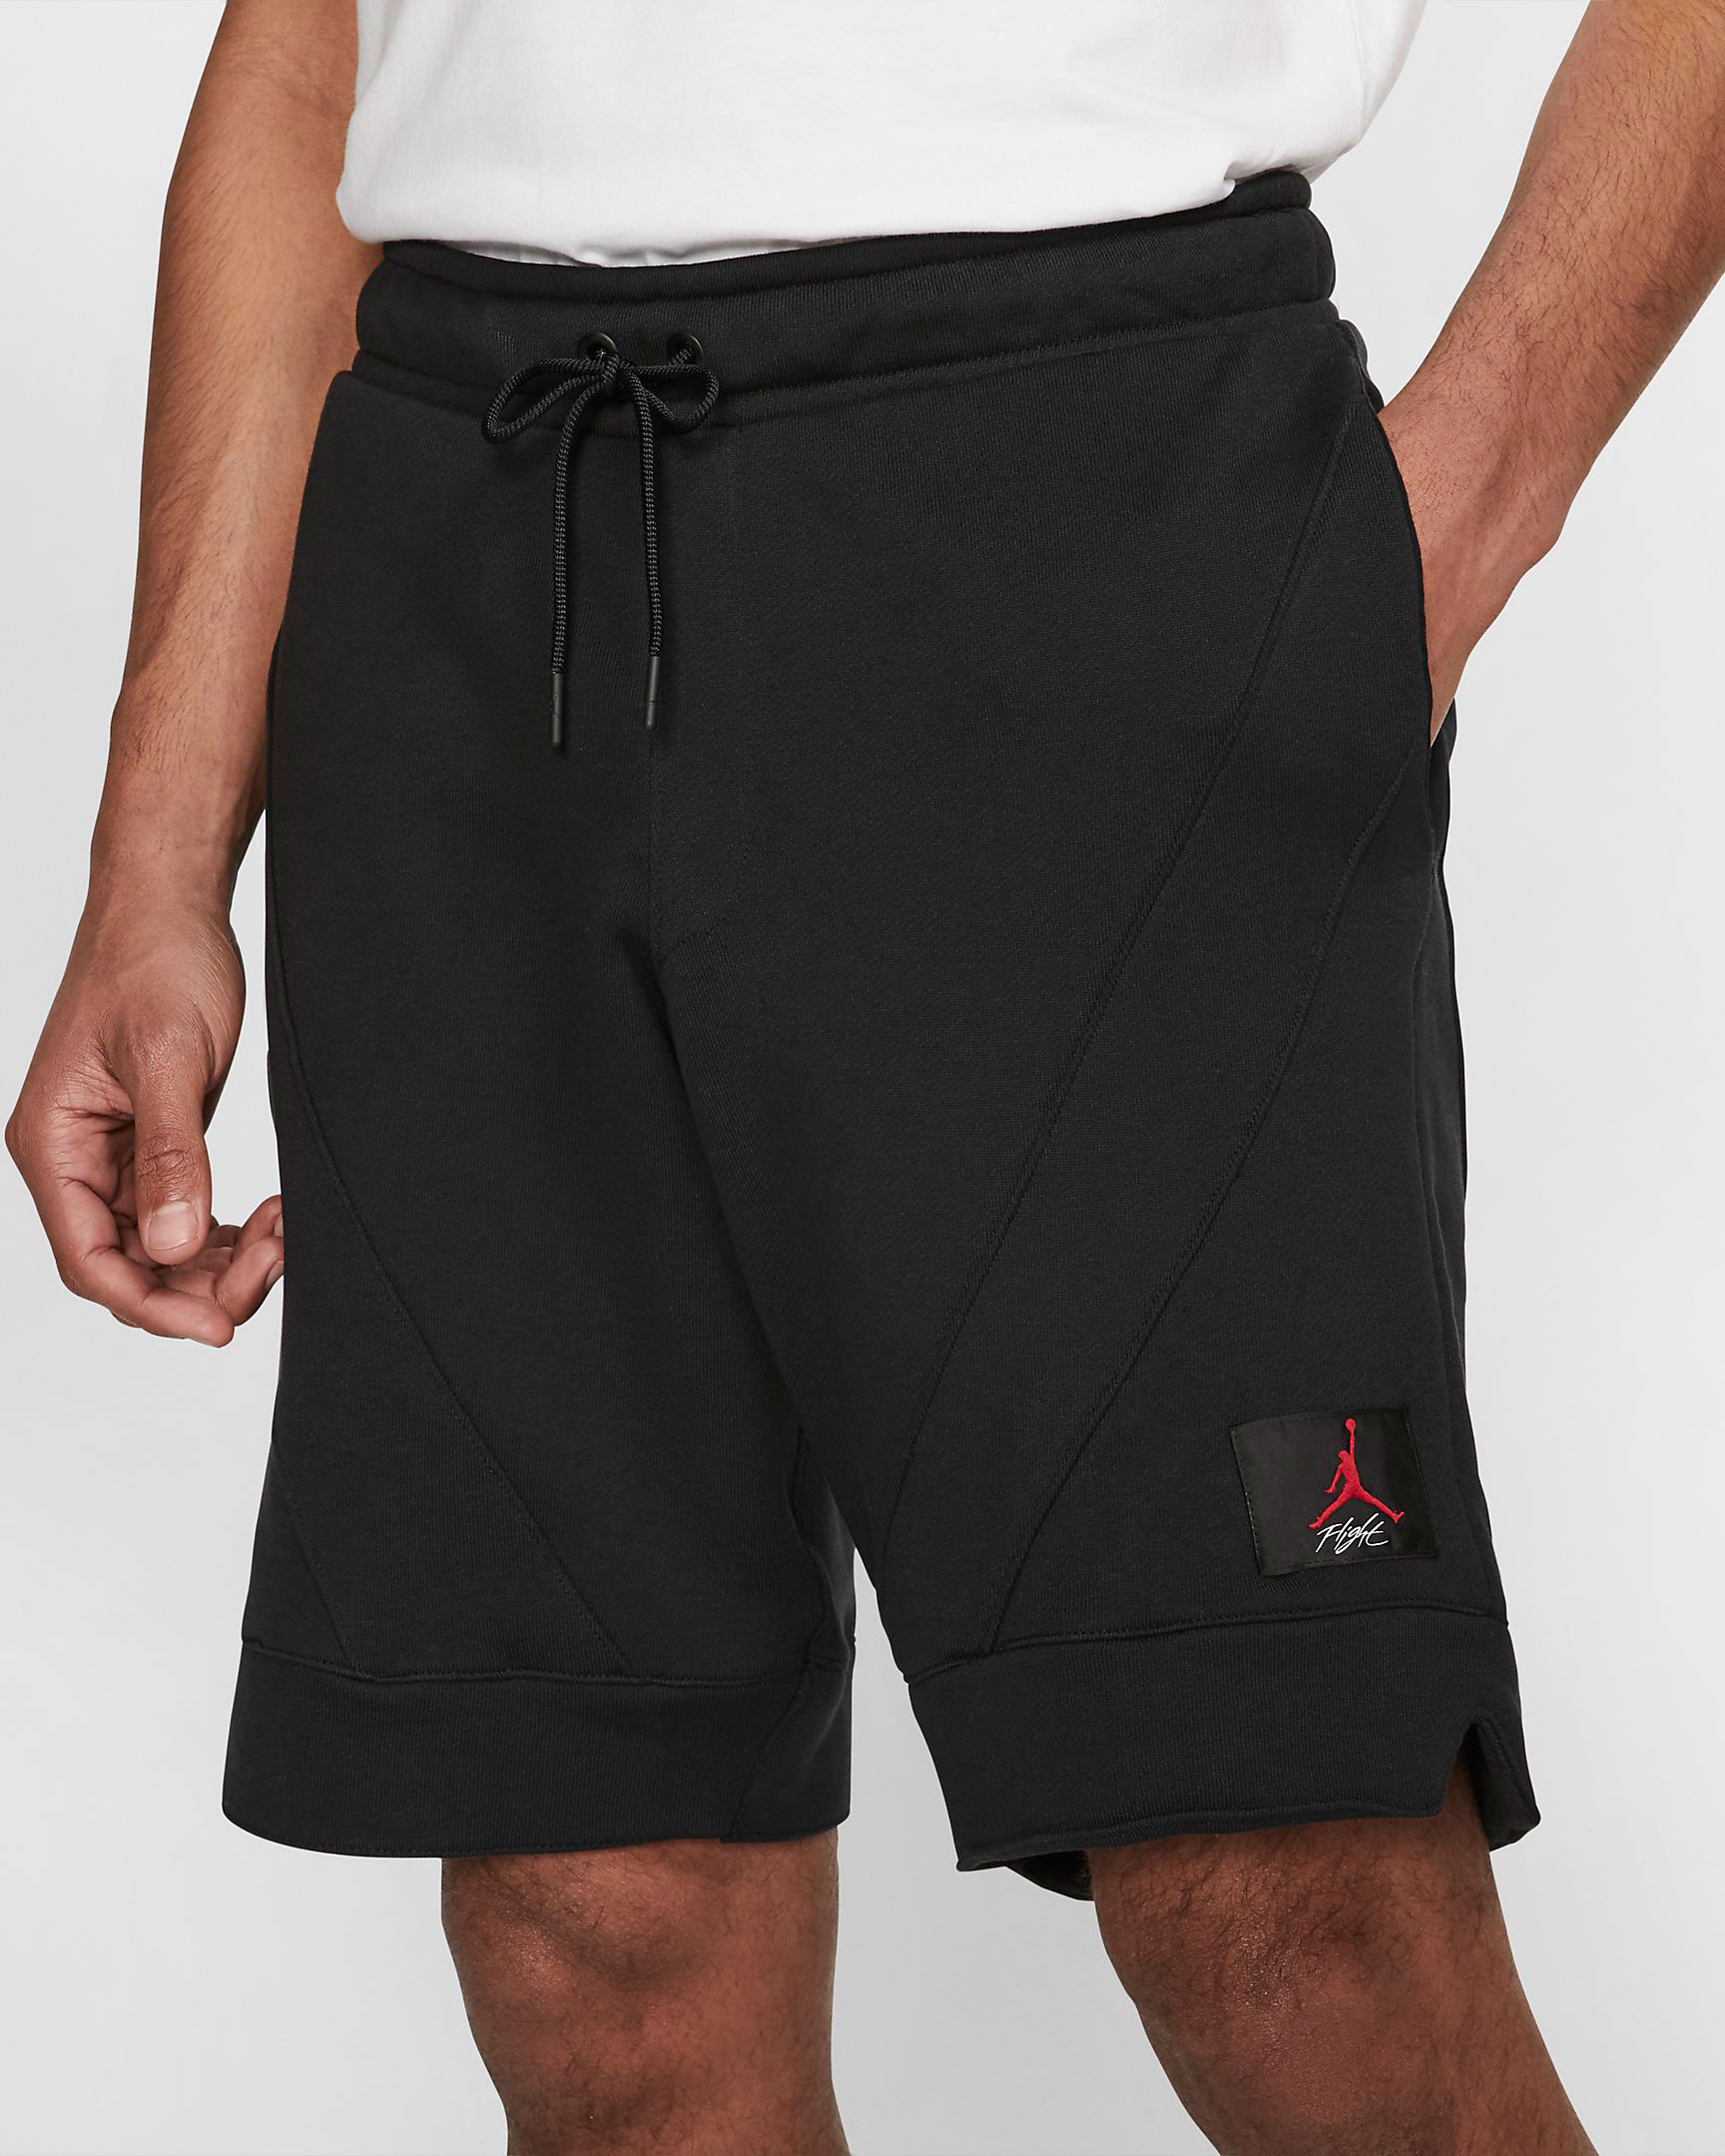 Bred Jordan 4 Matching Shorts | SneakerFits.com